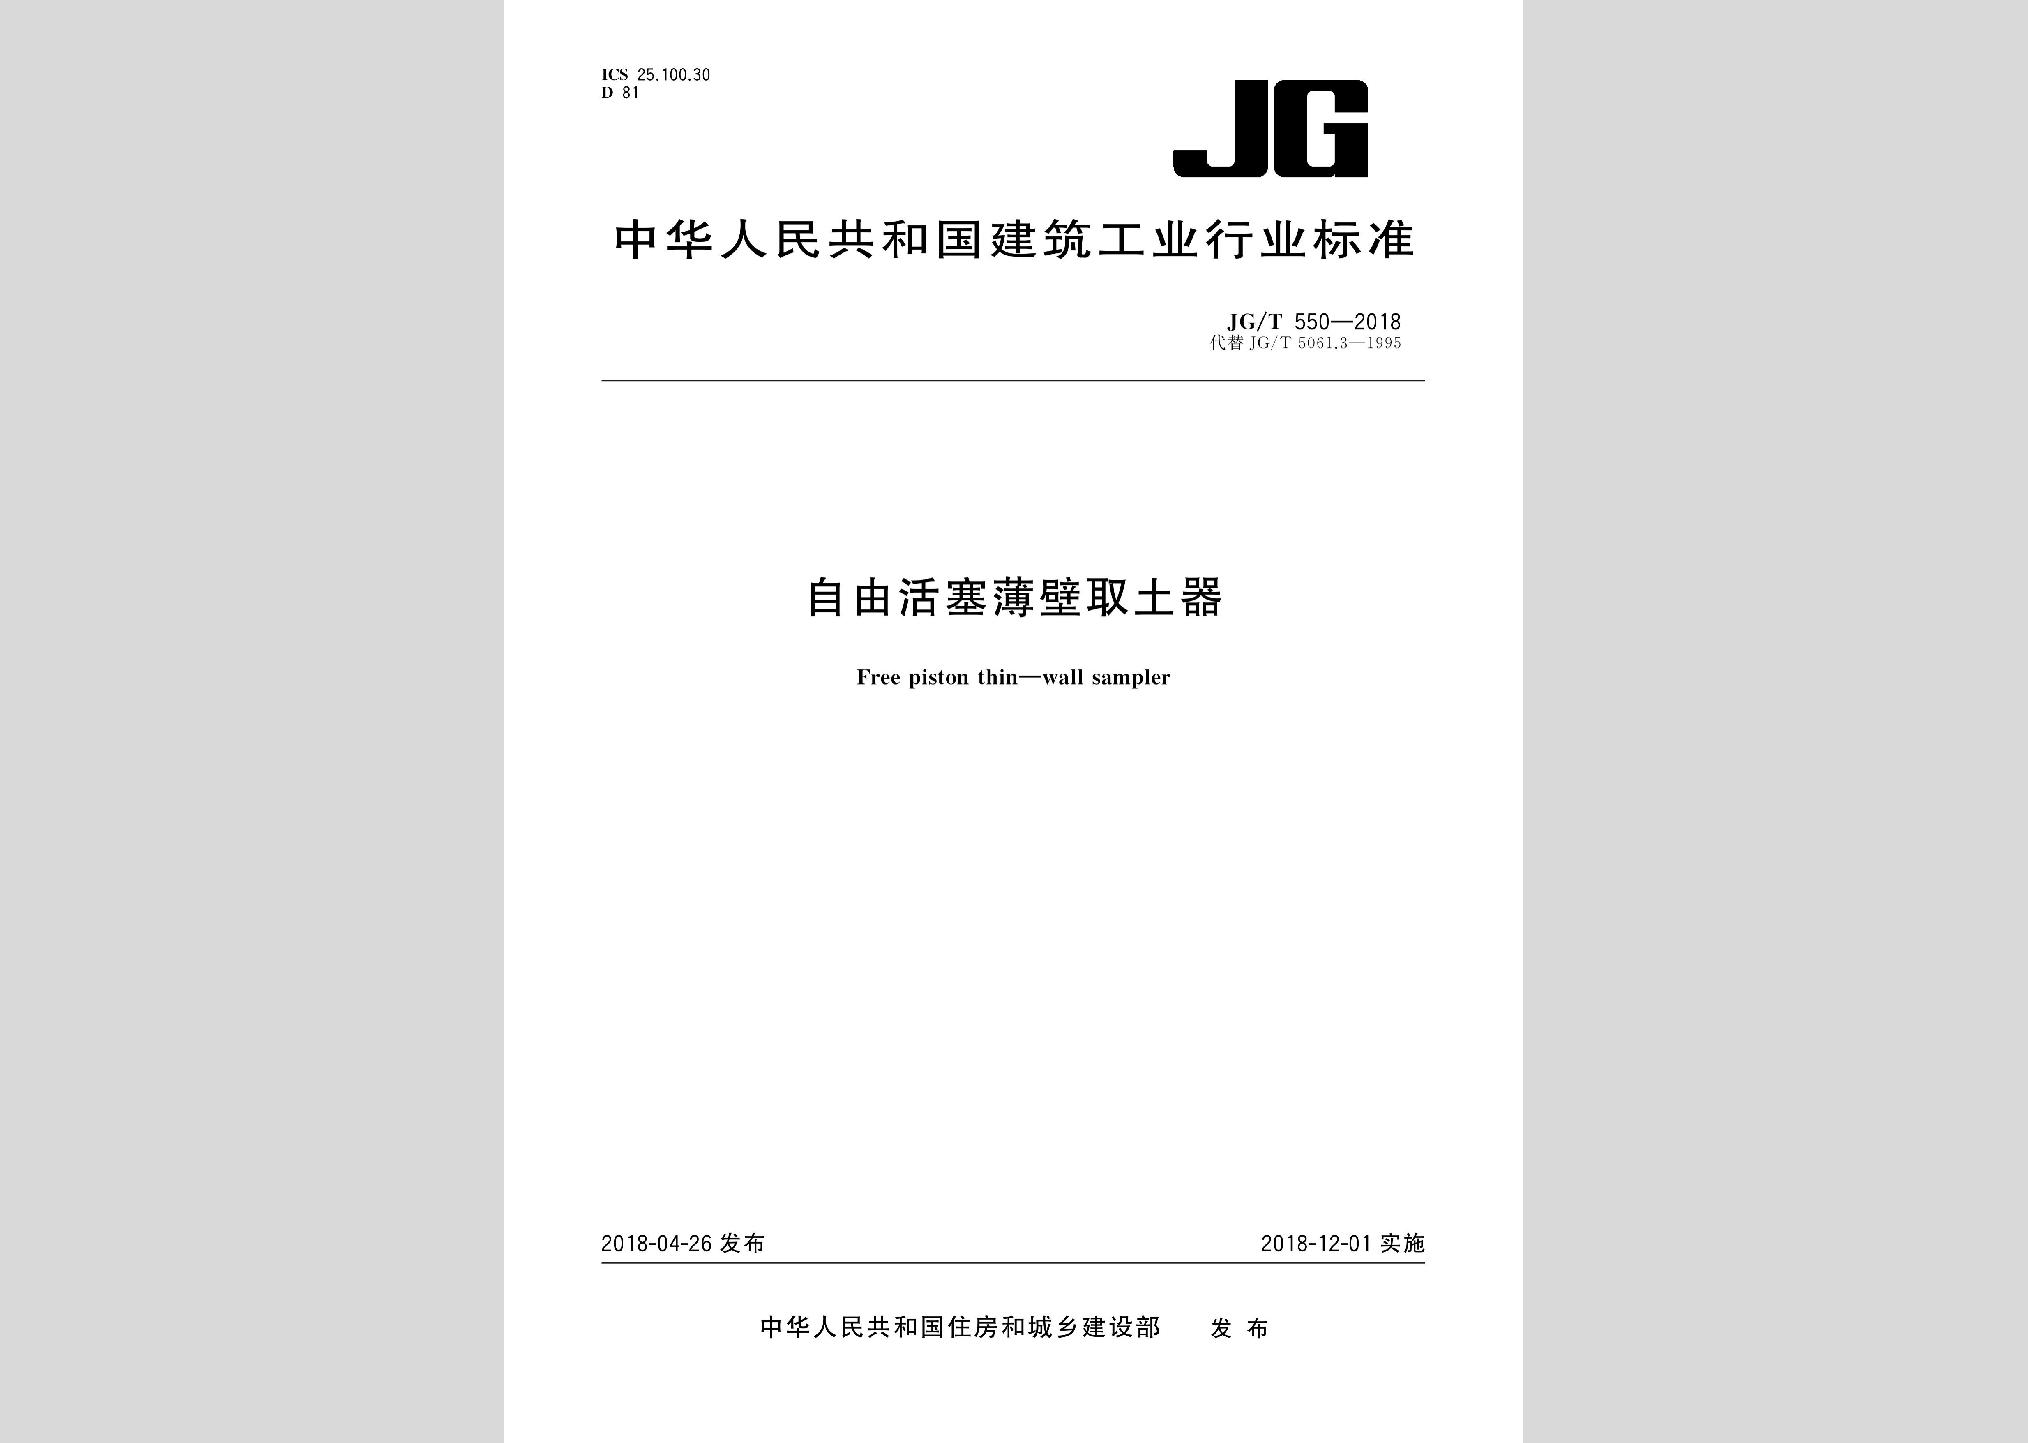 JG/T550-2018：自由活塞薄壁取土器